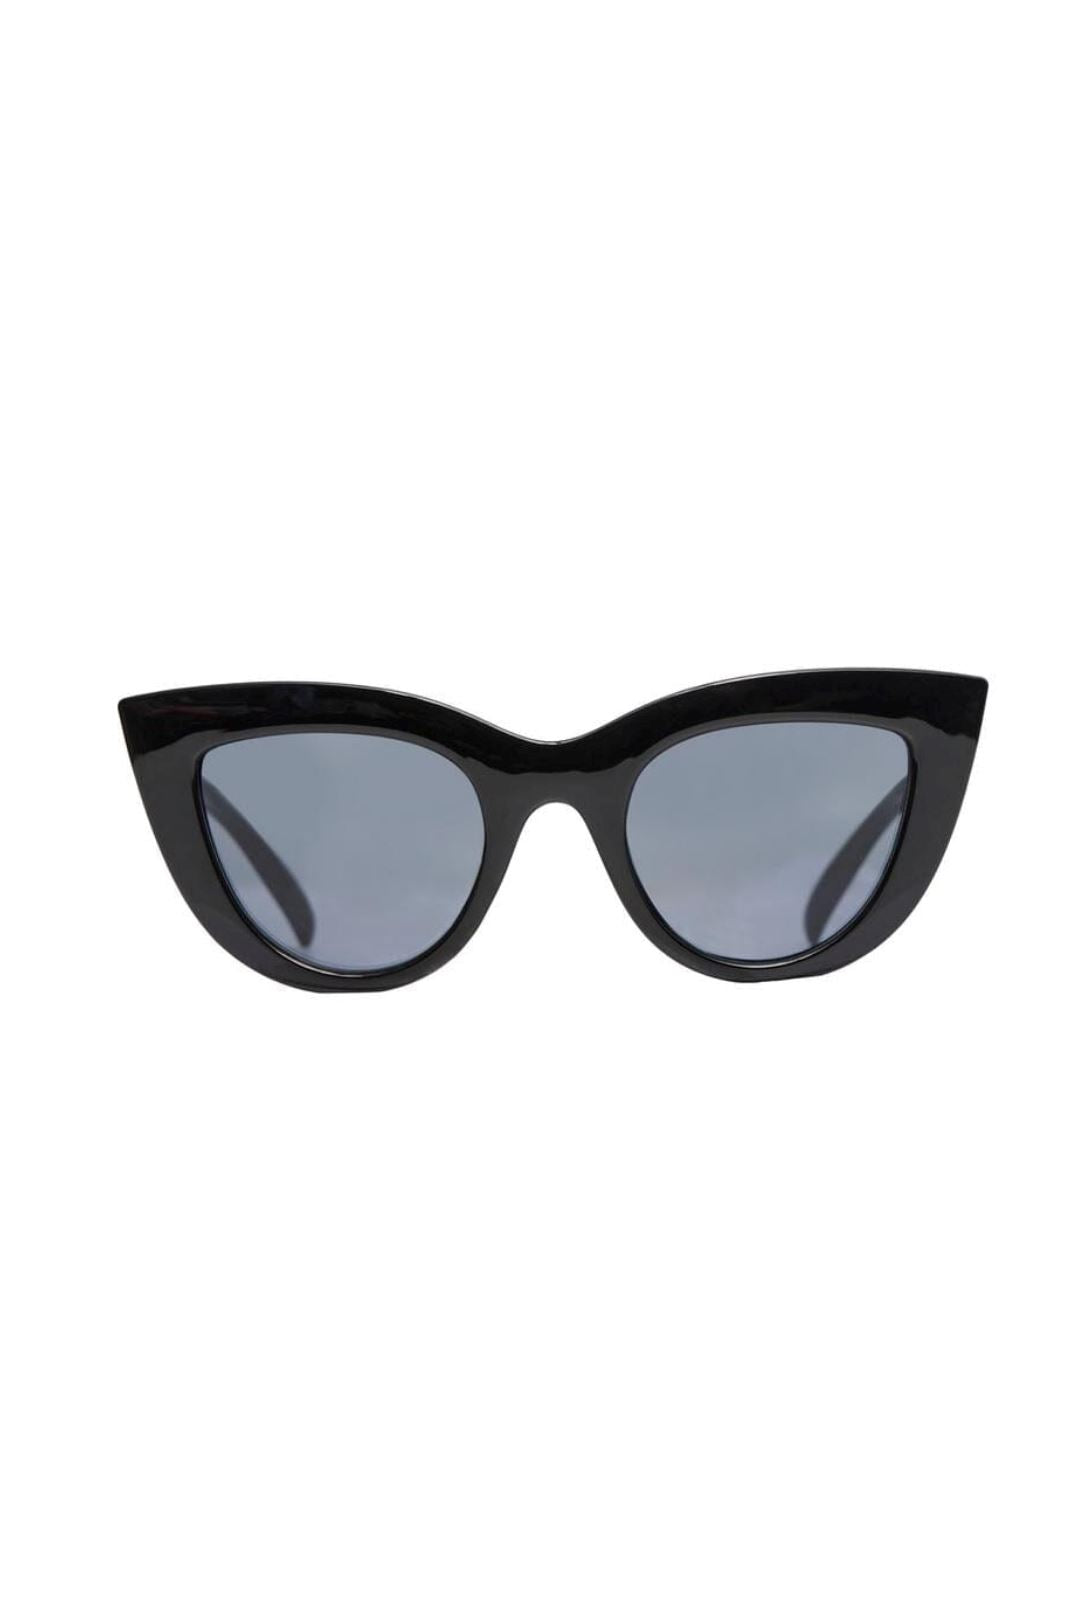 Pieces - Pcdonai Sunglasses - 3604001 Black Solbriller 